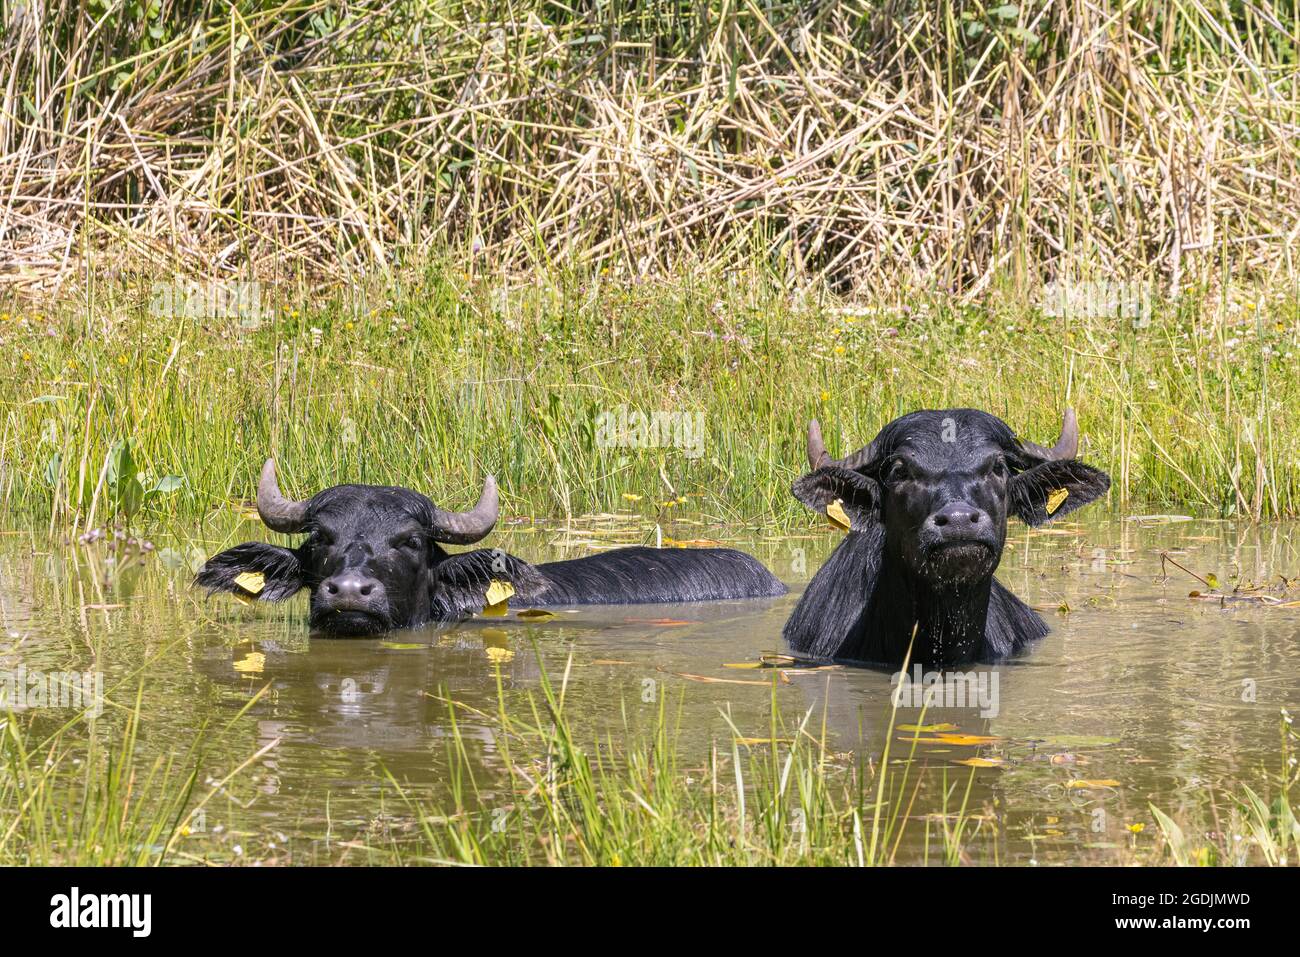 Asian water buffaloes, anoas (Bubalus spec.), two Asian water buffaloes bathing in a pond, Germany Stock Photo